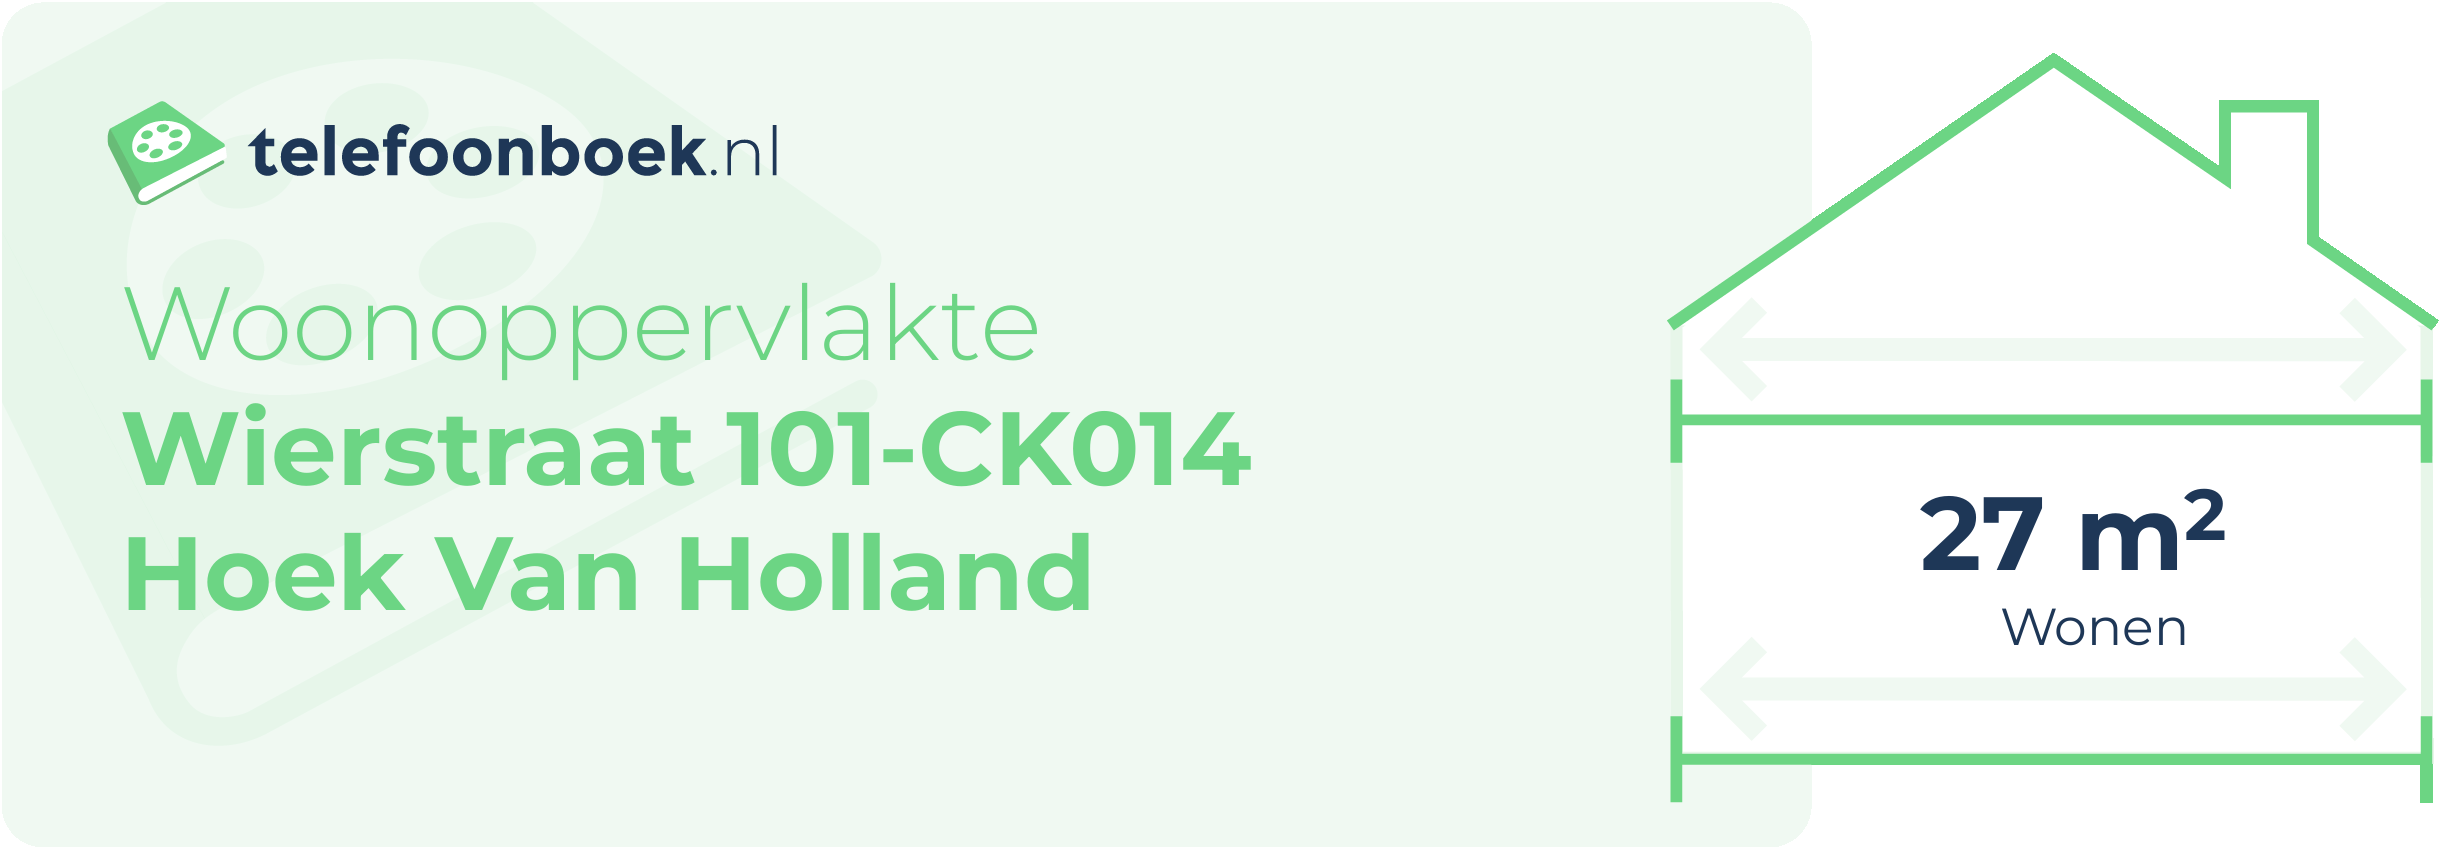 Woonoppervlakte Wierstraat 101-CK014 Hoek Van Holland